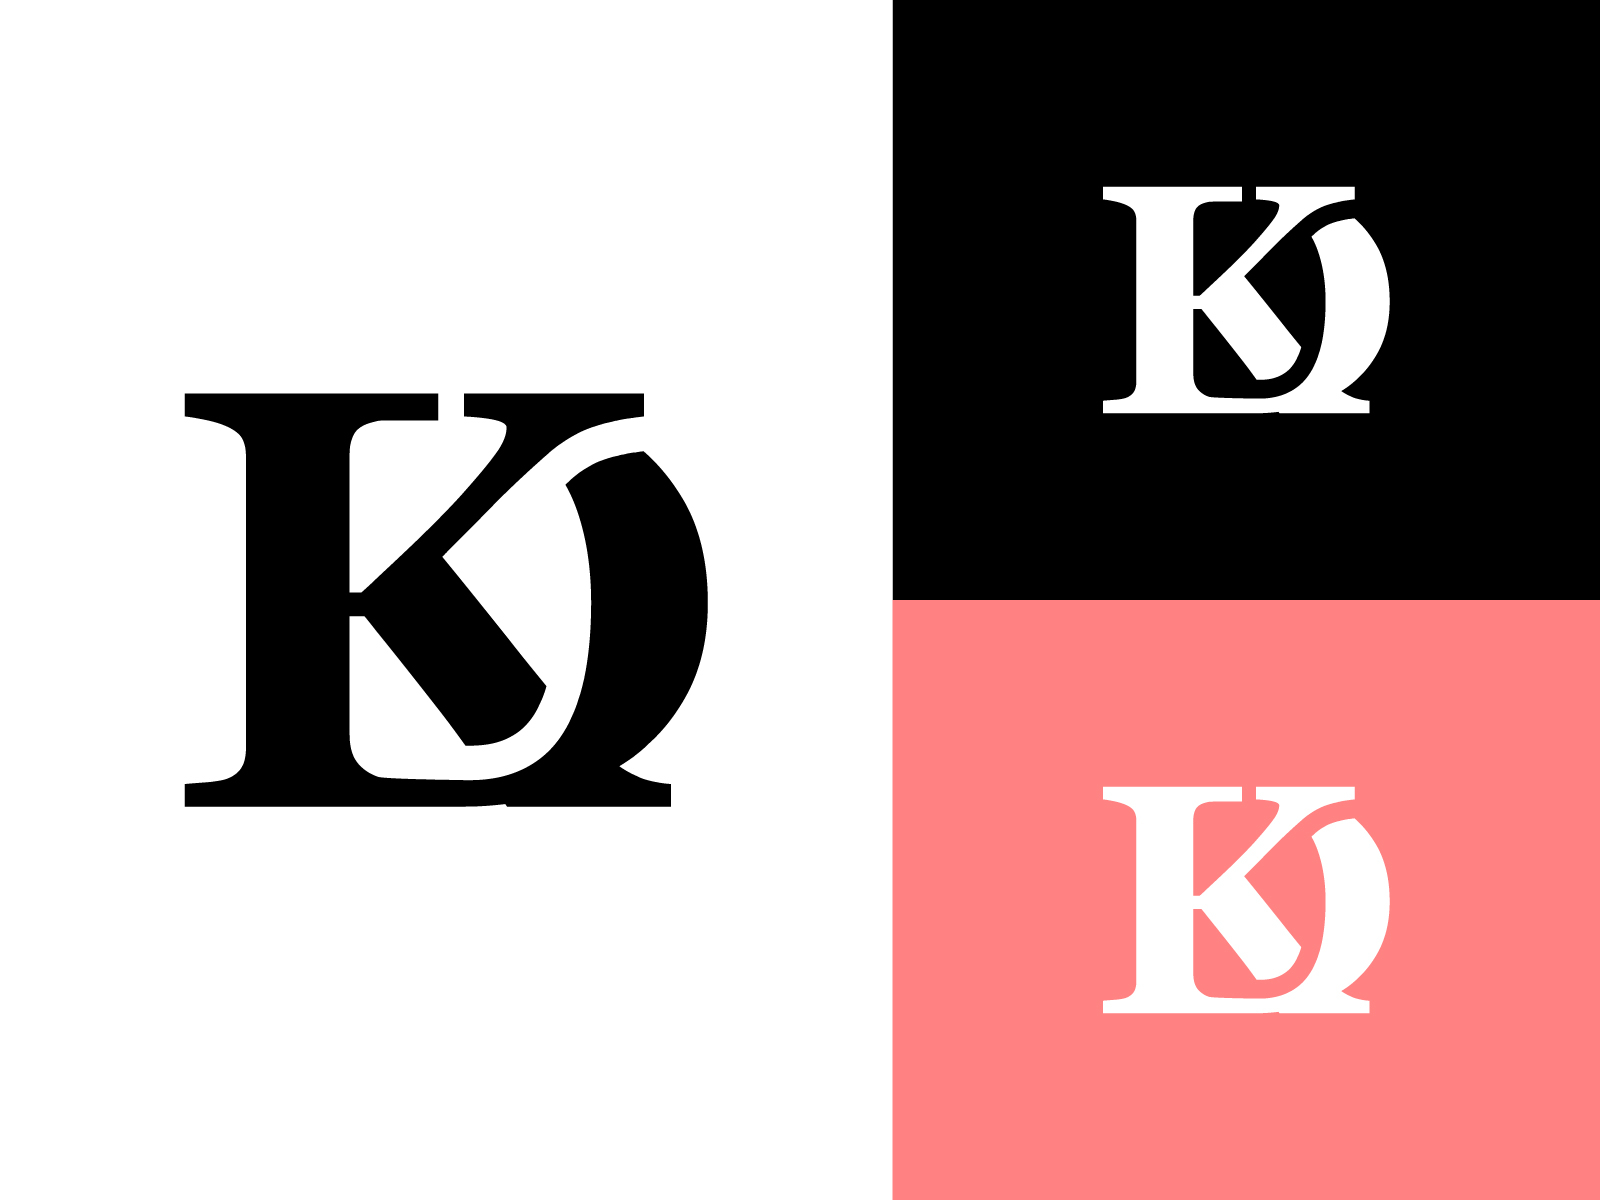 D K Logo Design on Android Phone || D K logo in Pixellab - YouTube